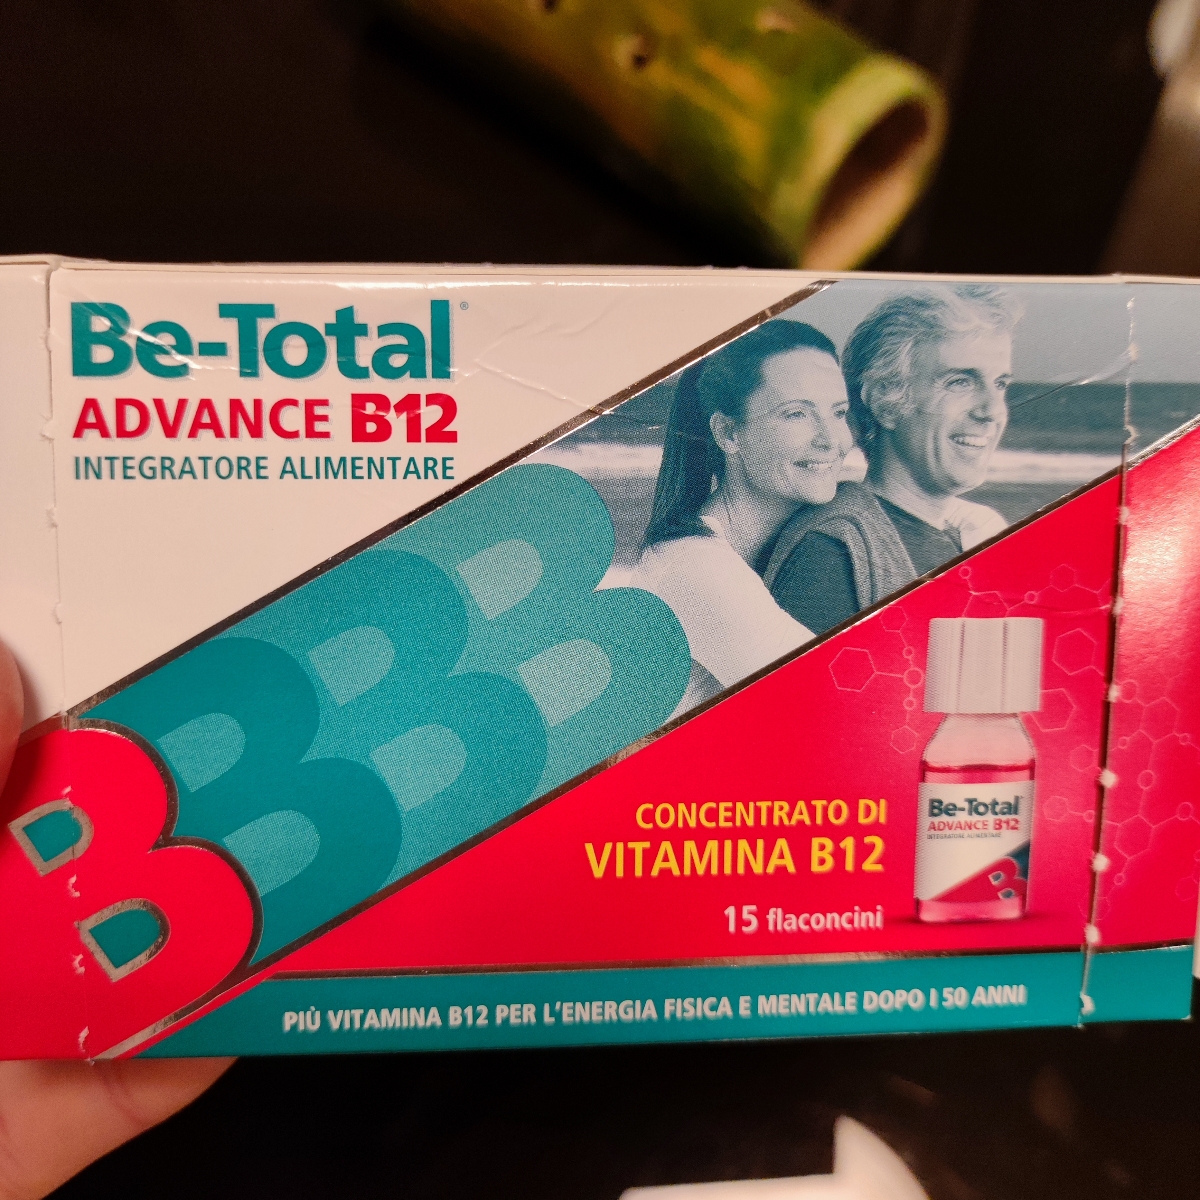 BeTotal Betotal advance B12 Review